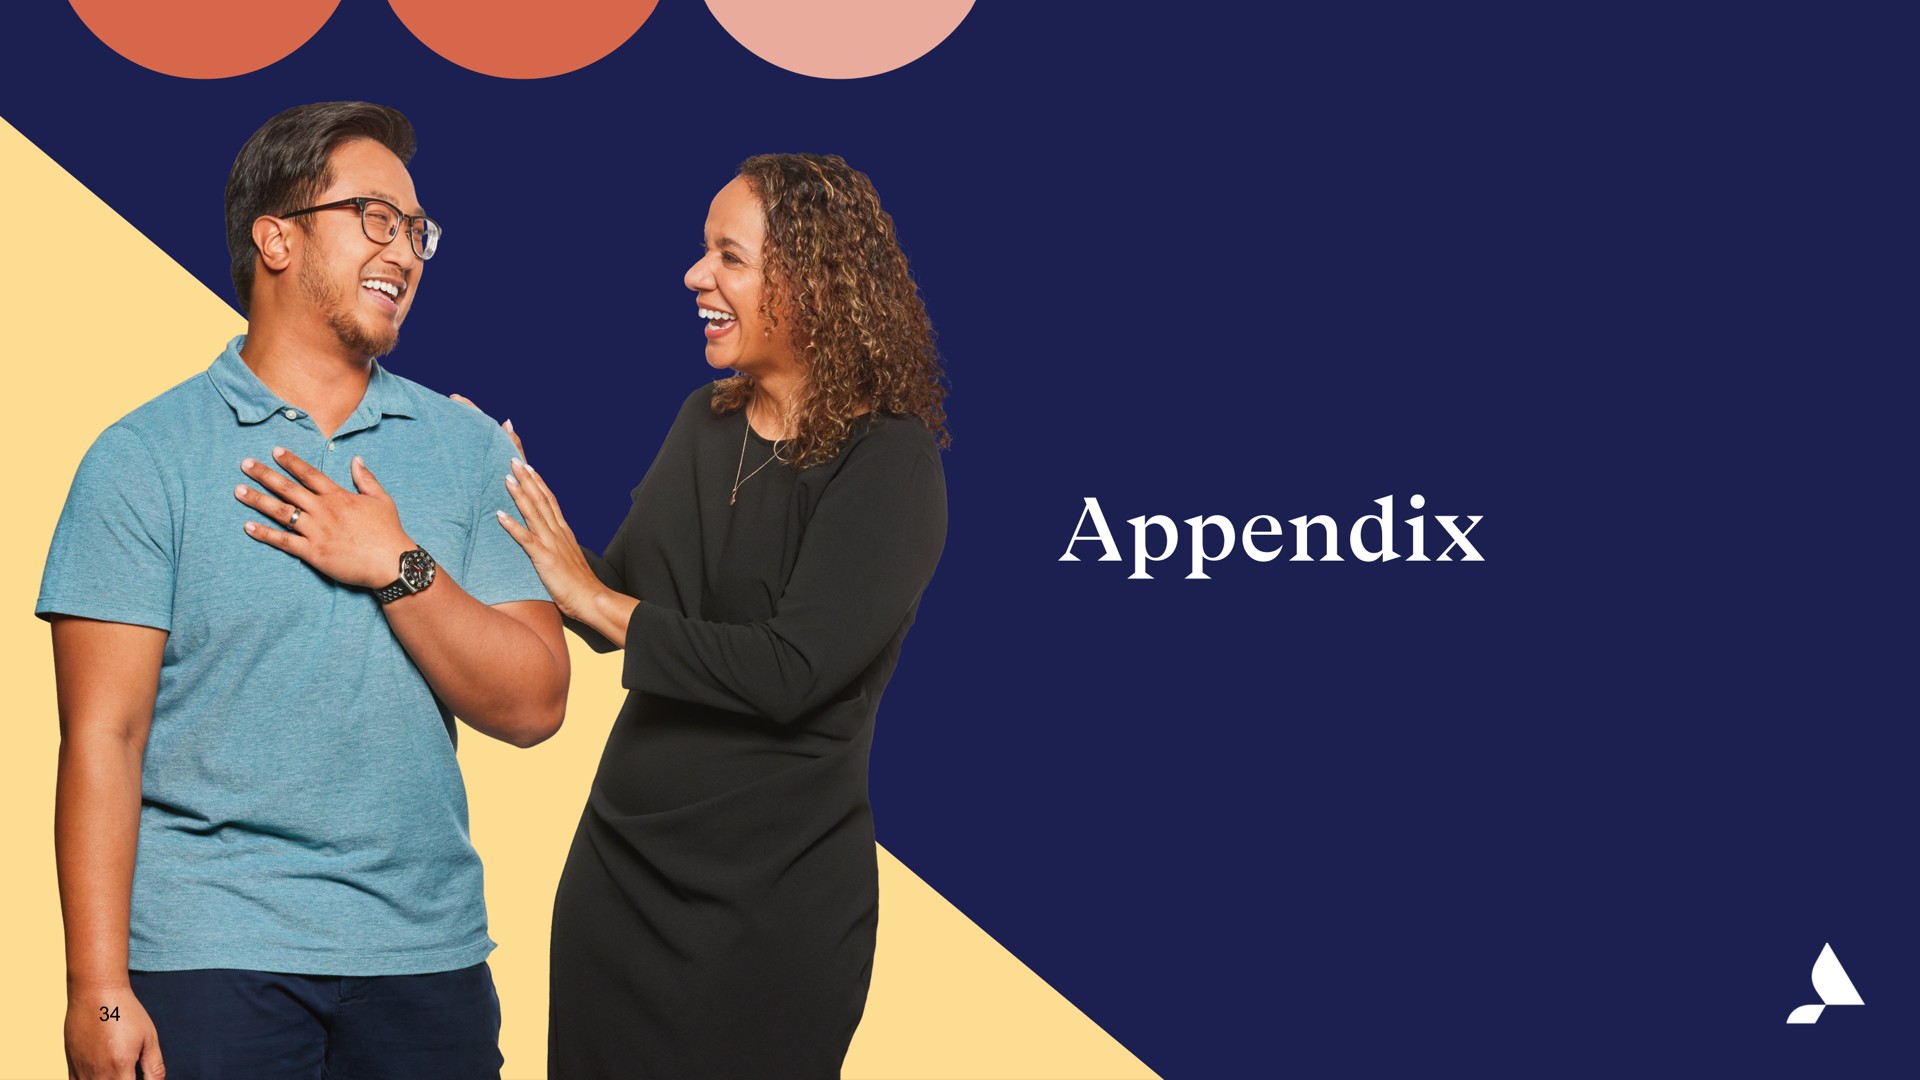 appendix | Accolade